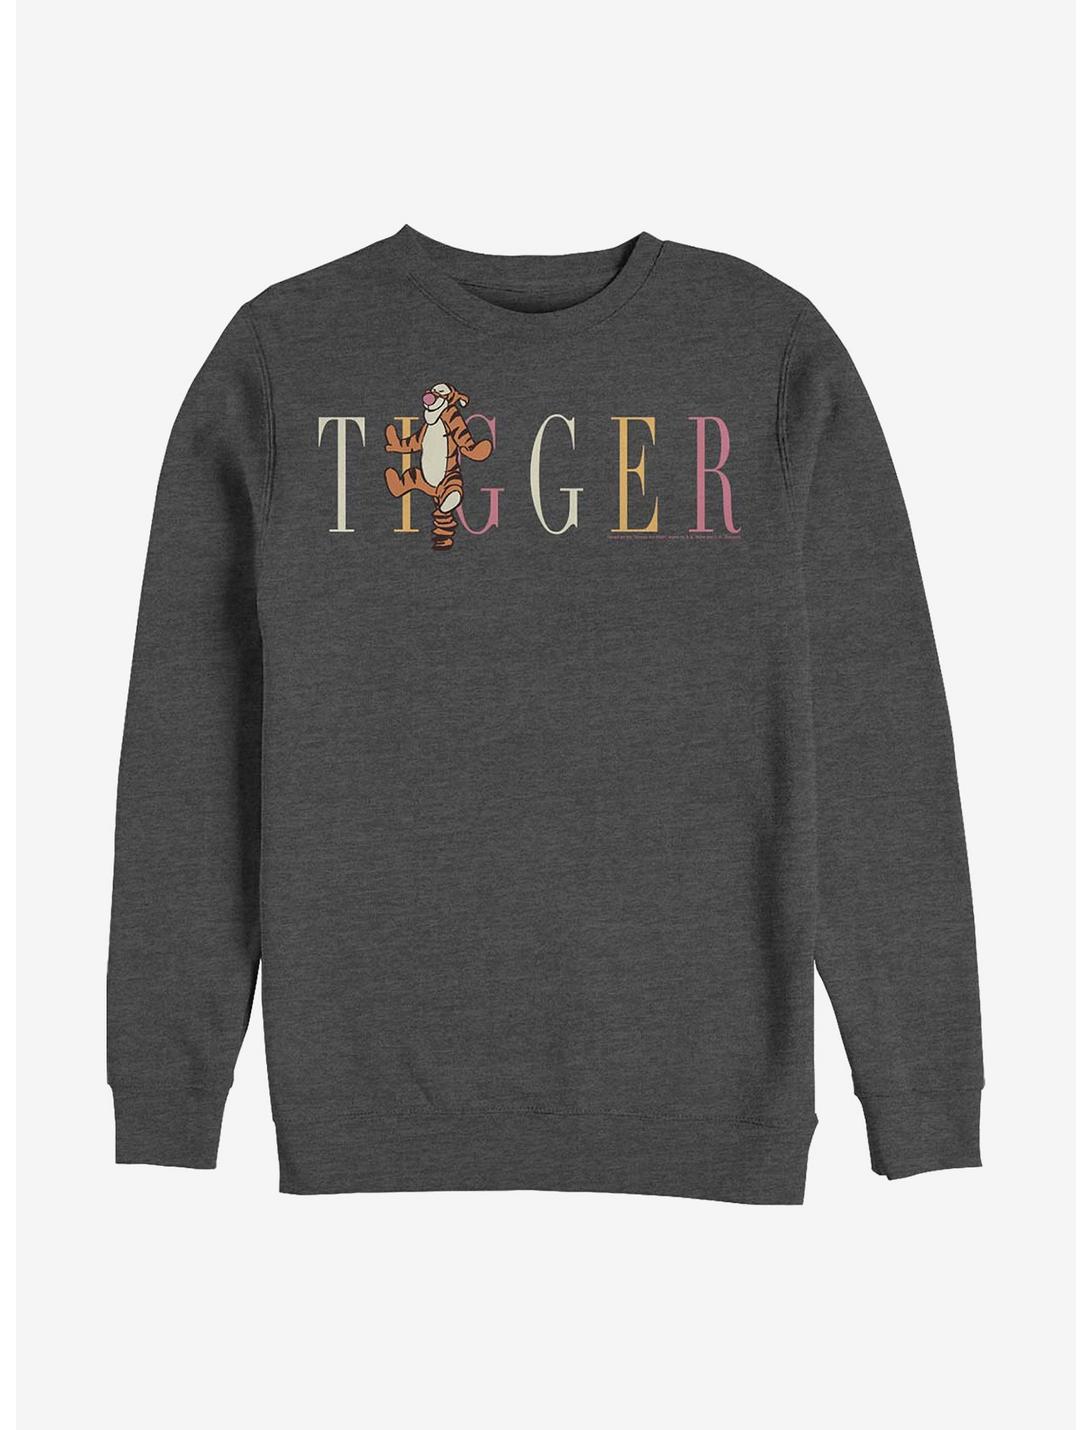 Disney Winnie The Pooh Tigger Fashion Crew Sweatshirt, CHAR HTR, hi-res